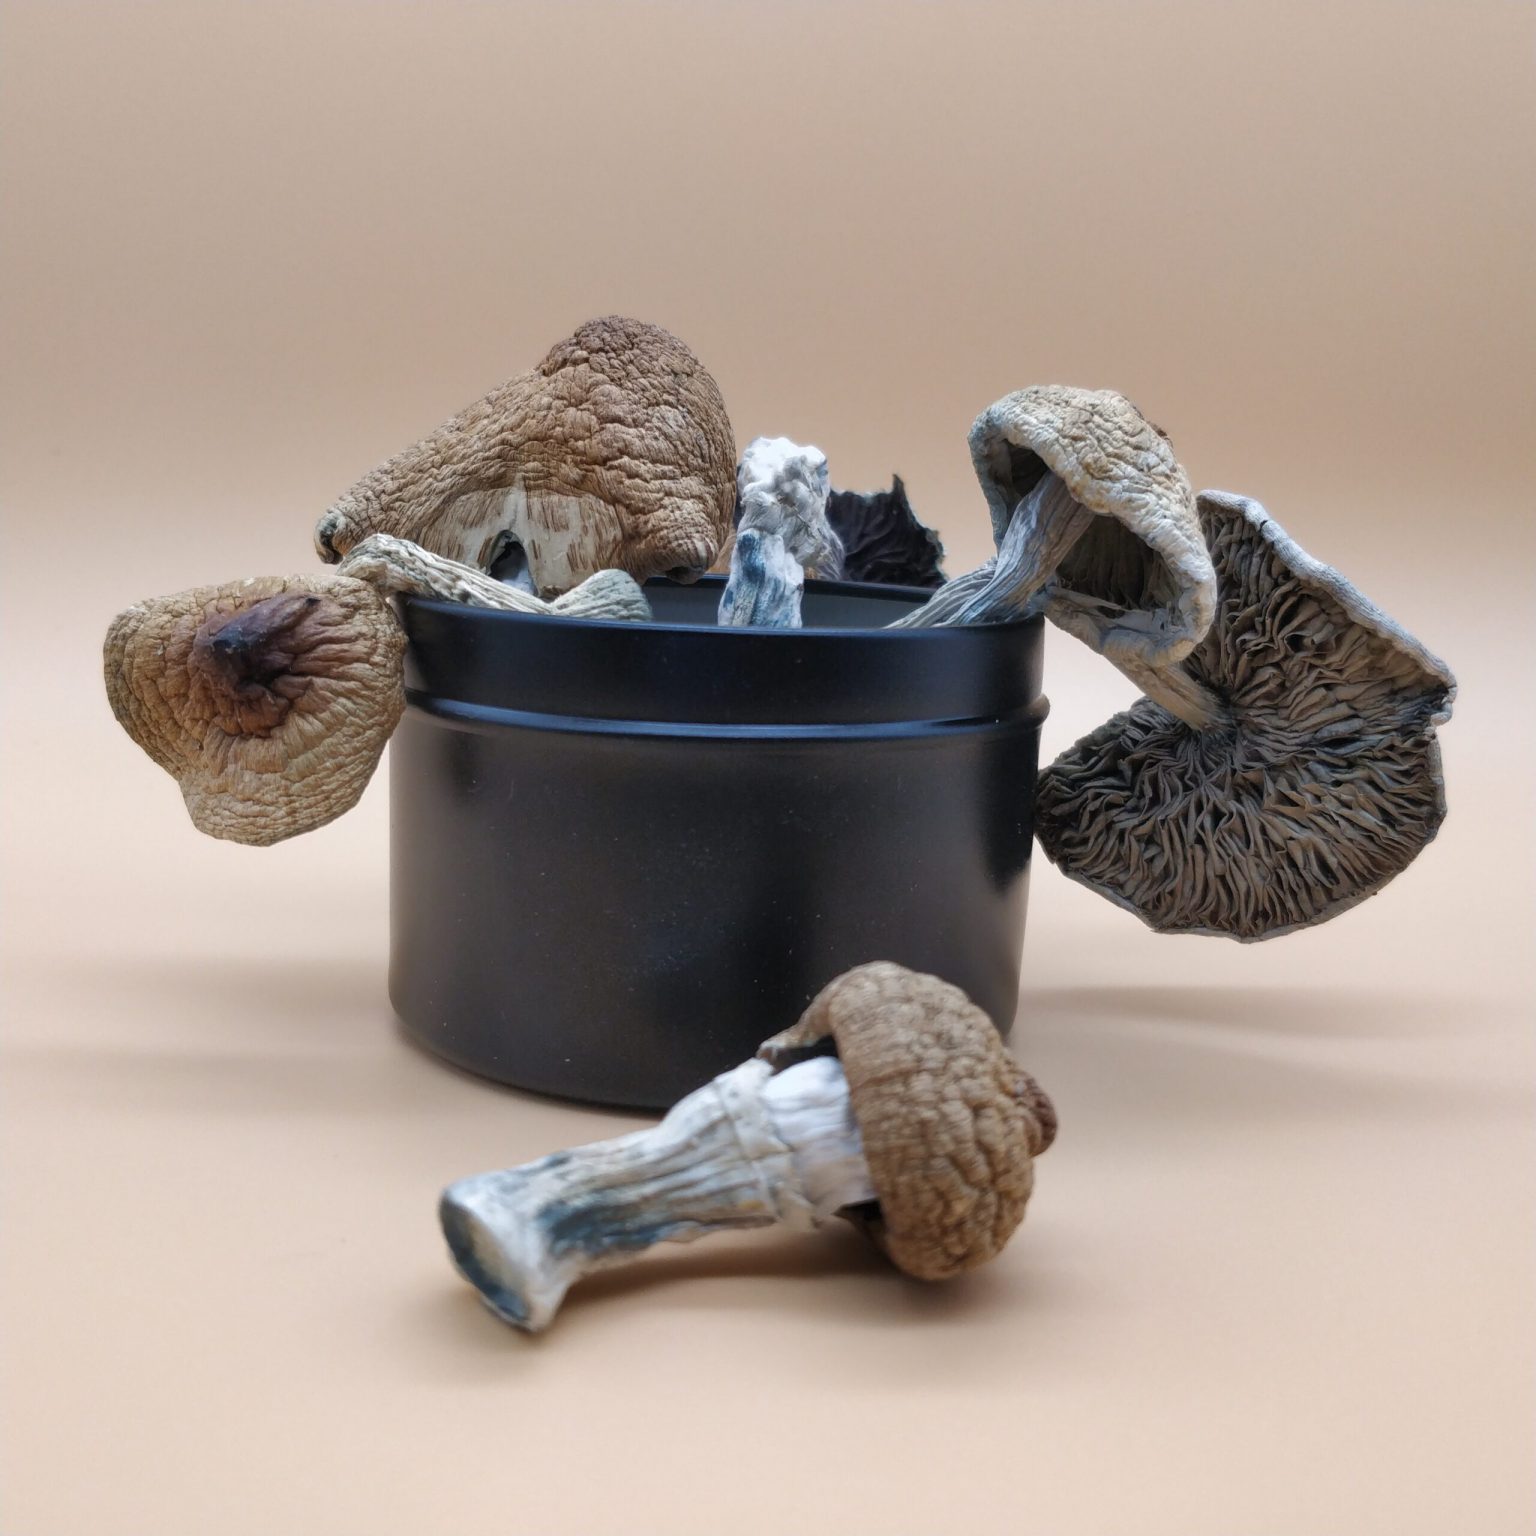 SHAFAA Golden Teacher Dried Magic Mushrooms